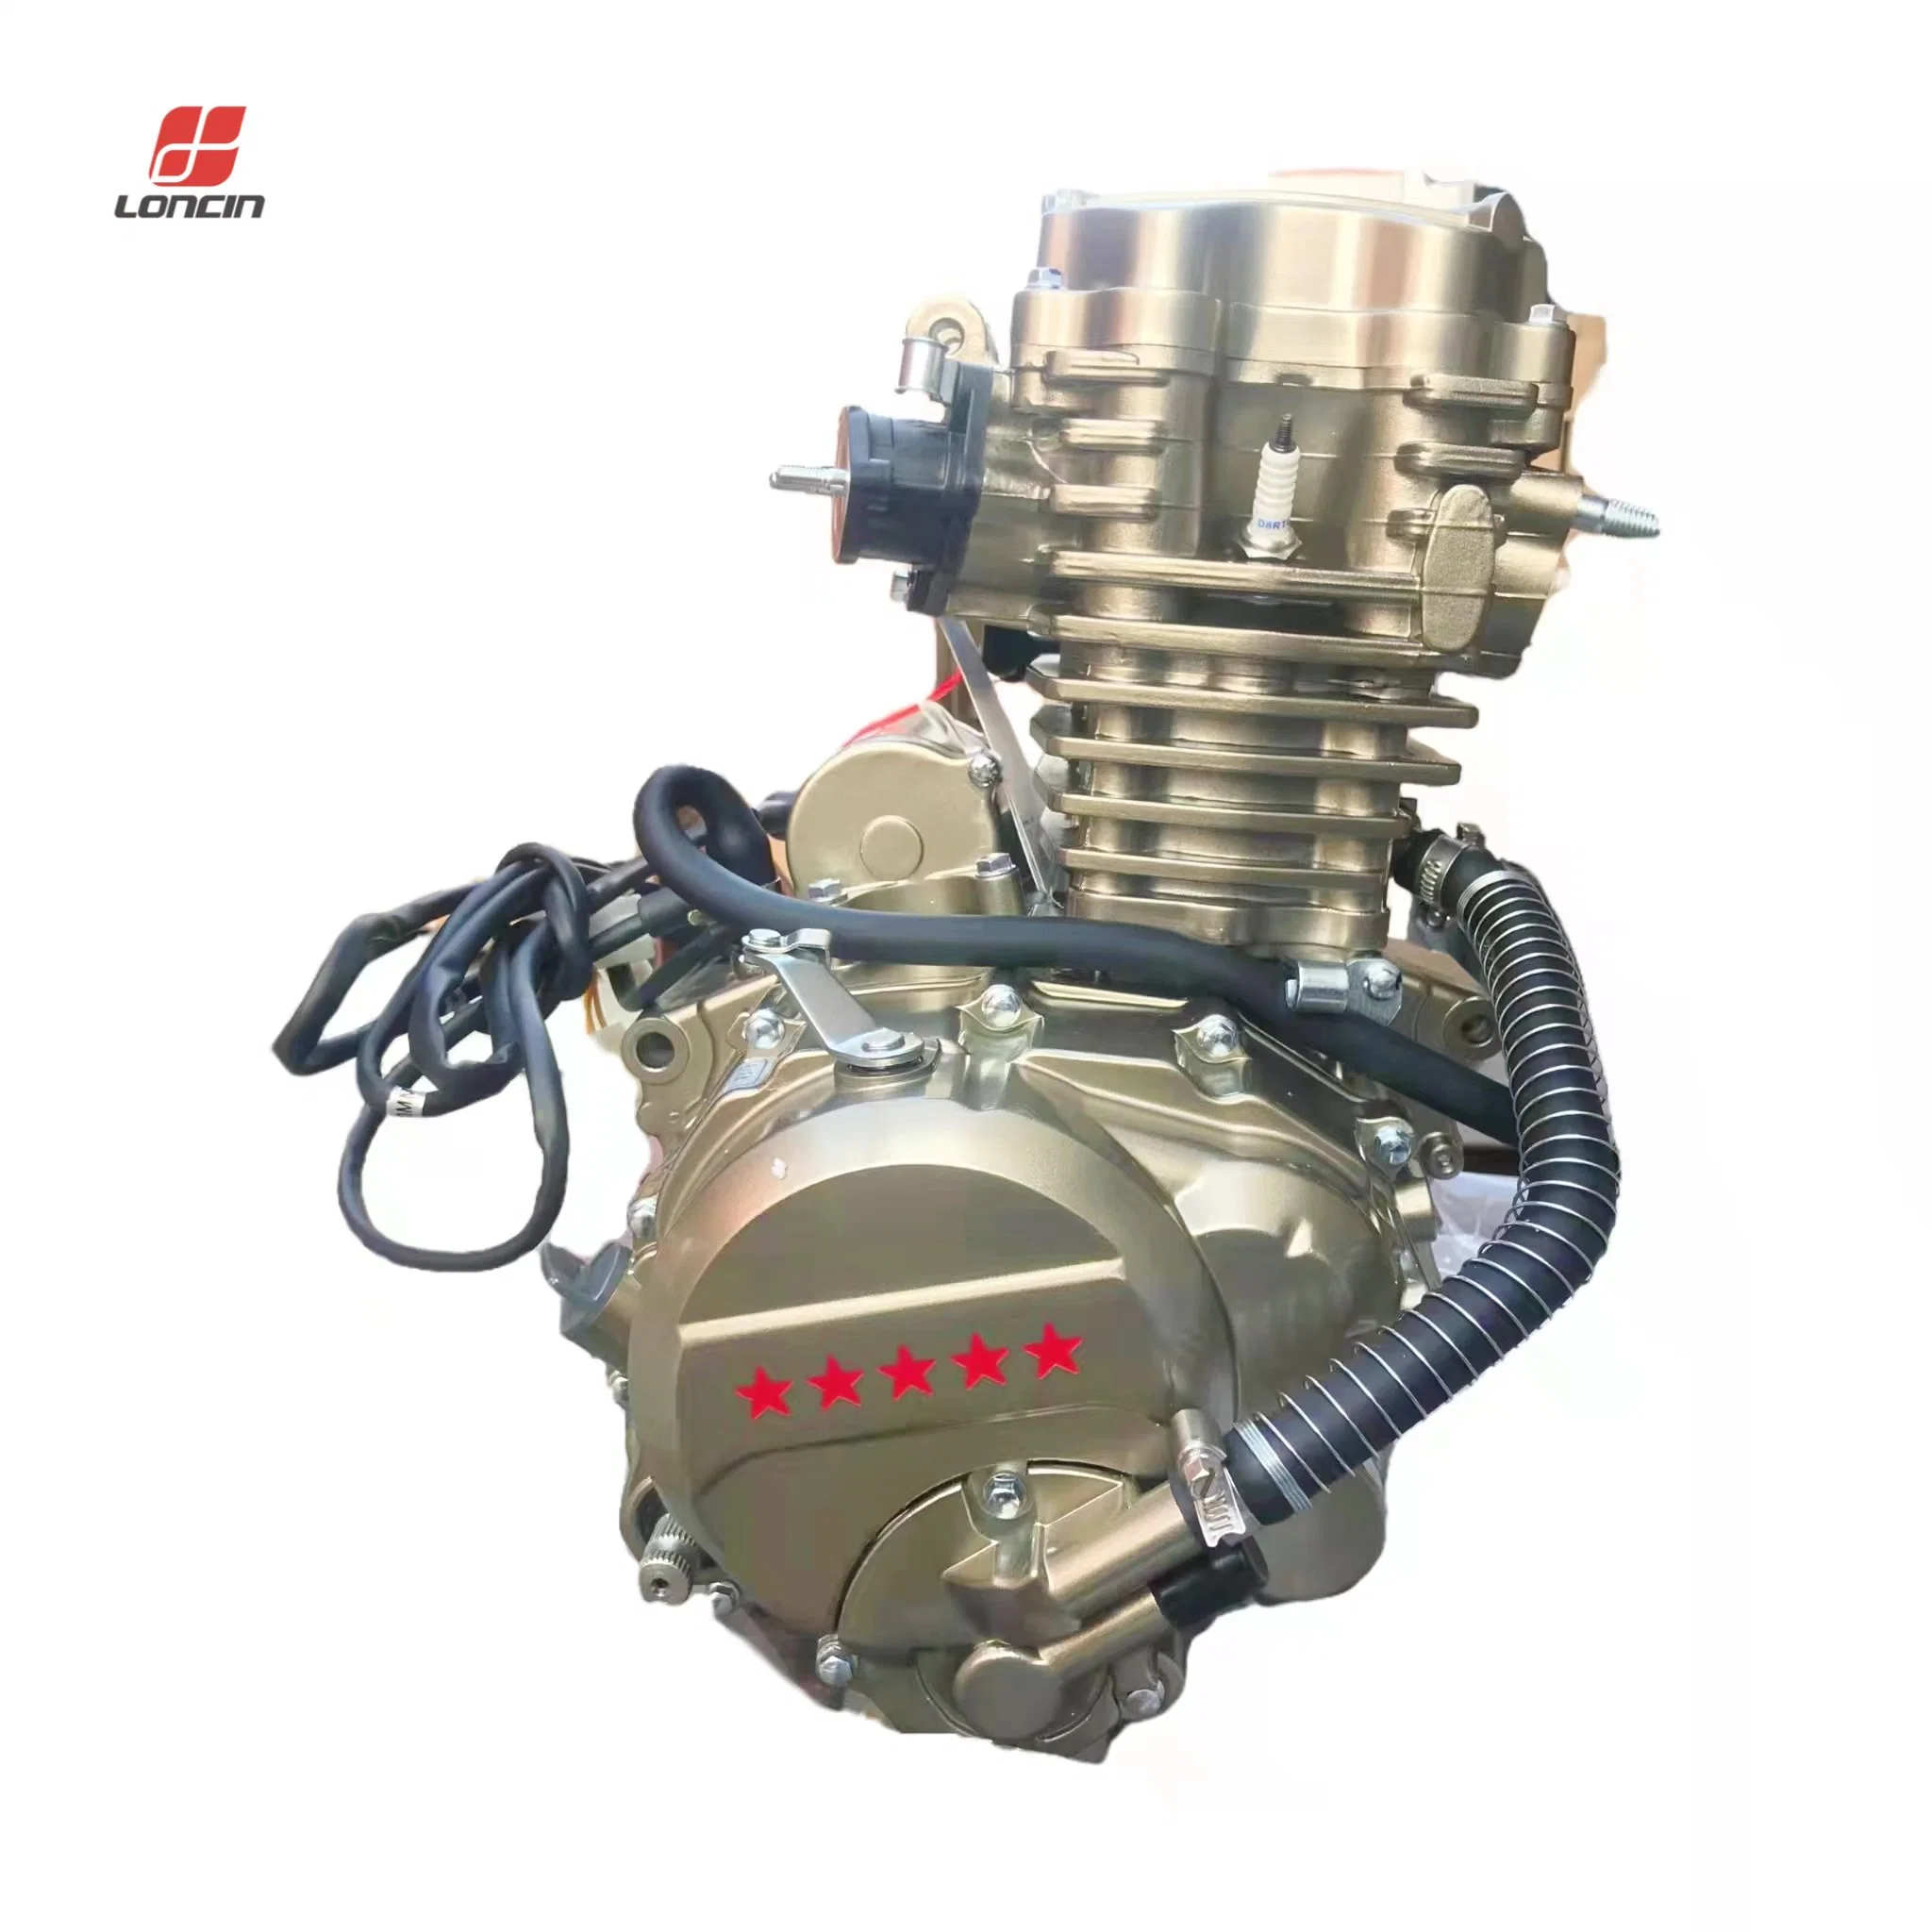 OEM Loncin Engine200cc 4-Stroke Engine Go-Kart & Kart Racer Motorcycle Parts & Accessories